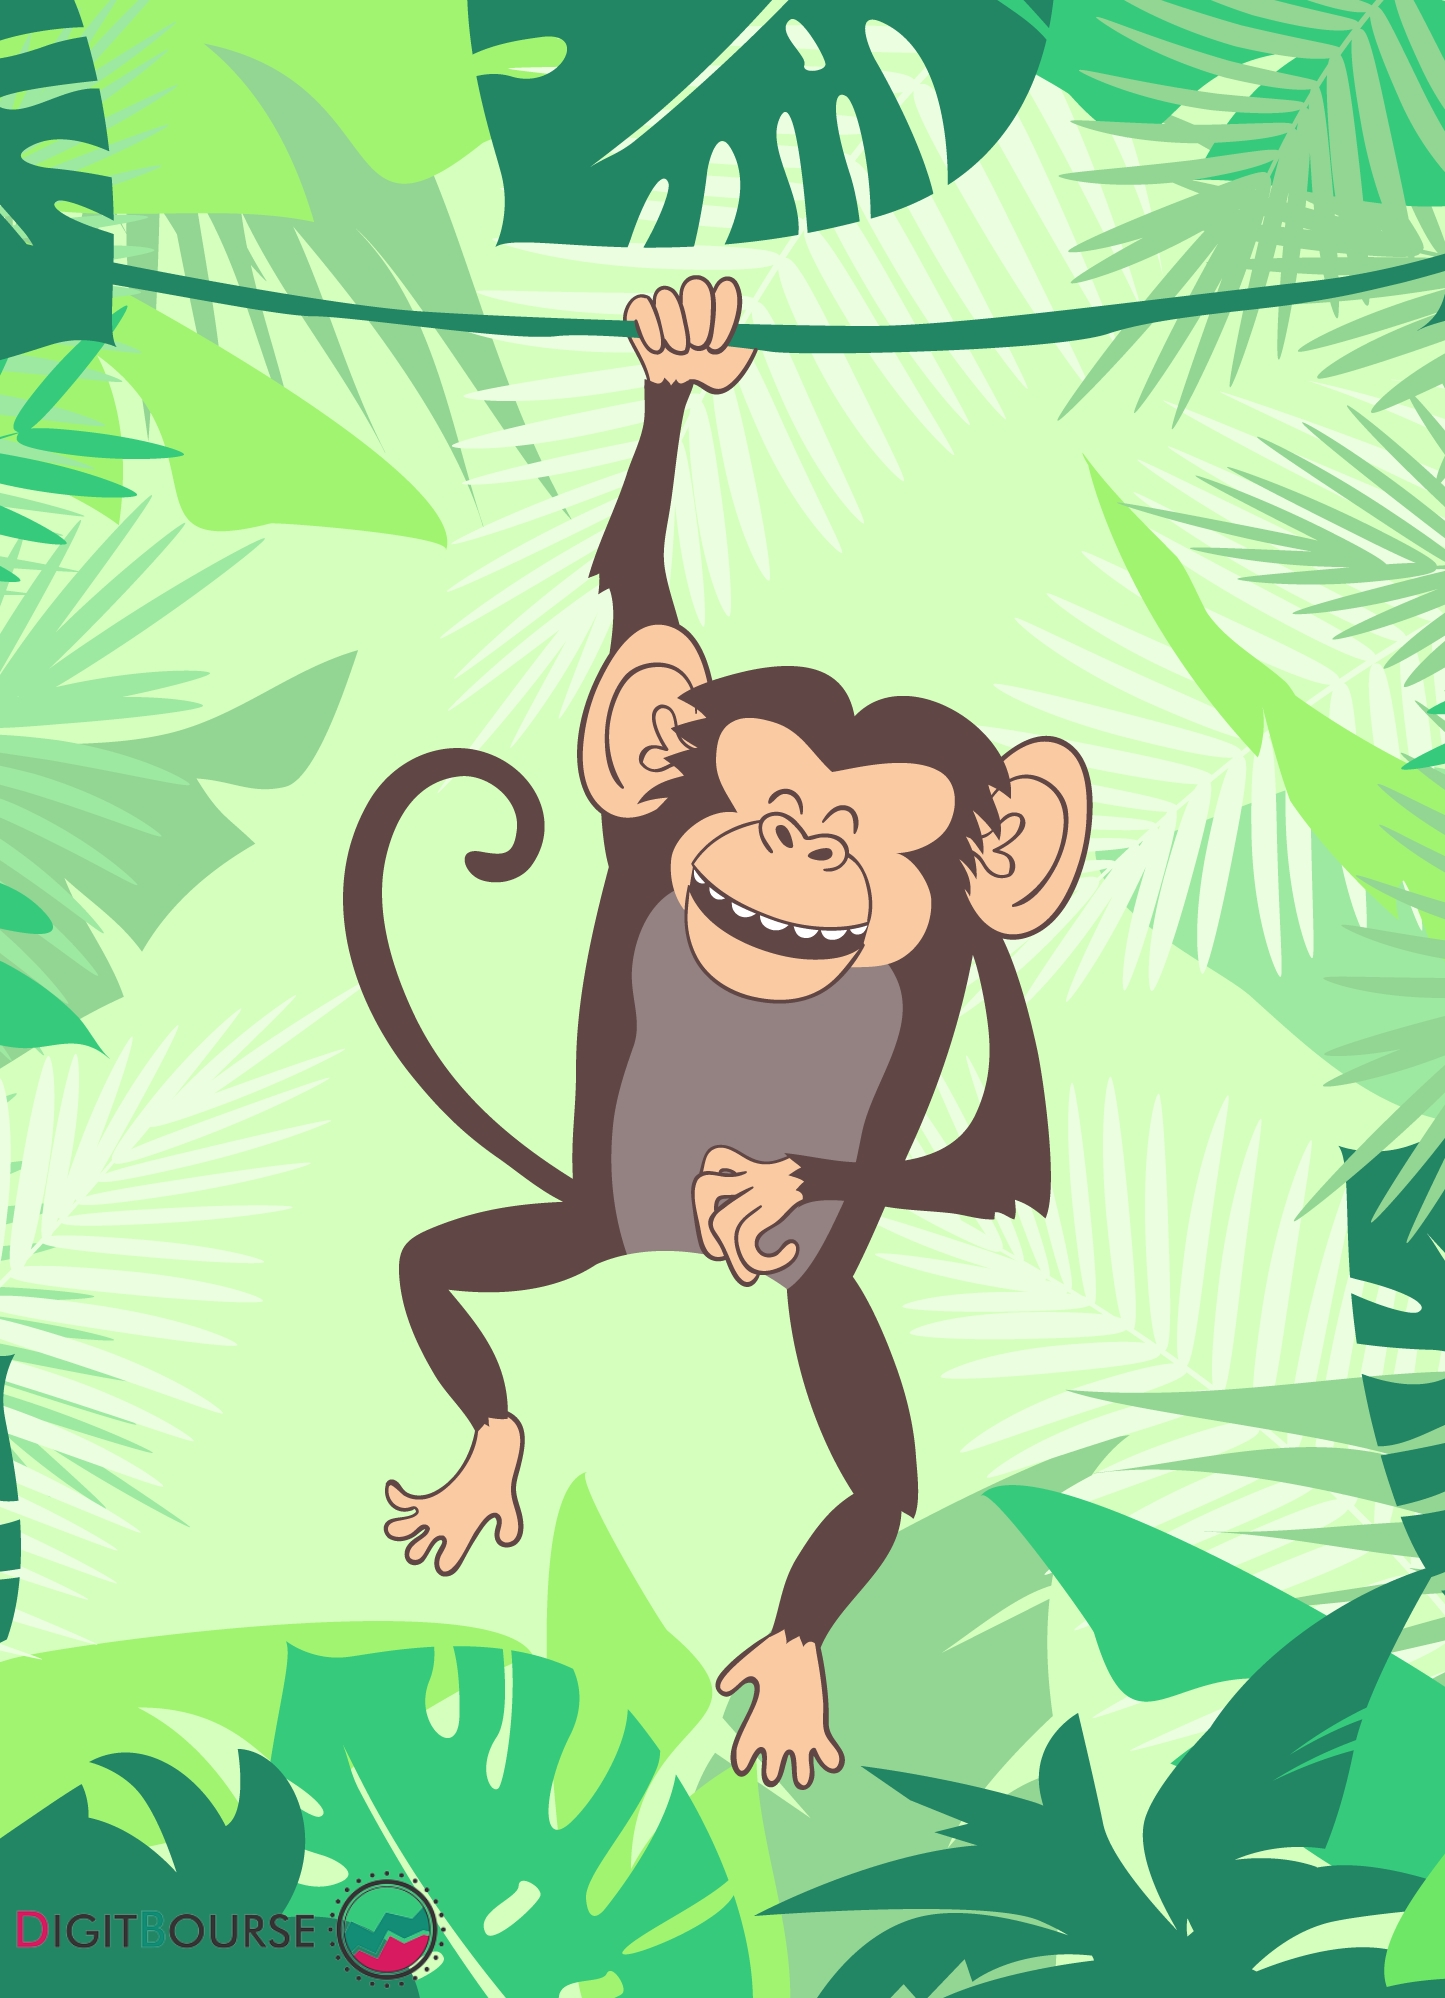 Hoho the monkey